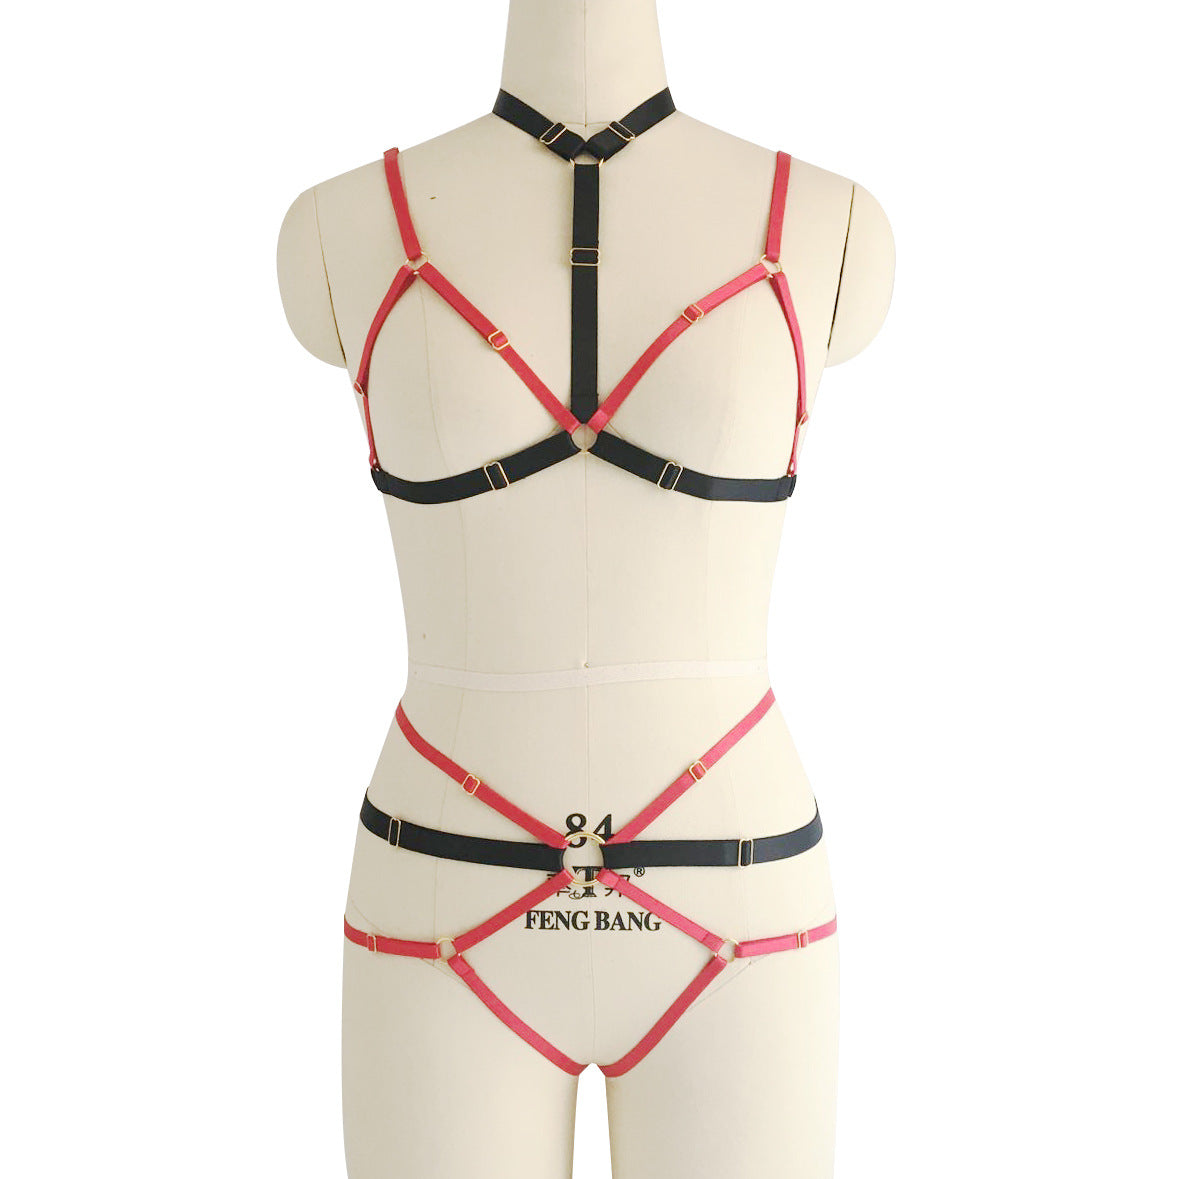 Nasty Sexy Crotchless Lingerie Set Revealing Bdsm Lingerie Harness Women  Bra Panties